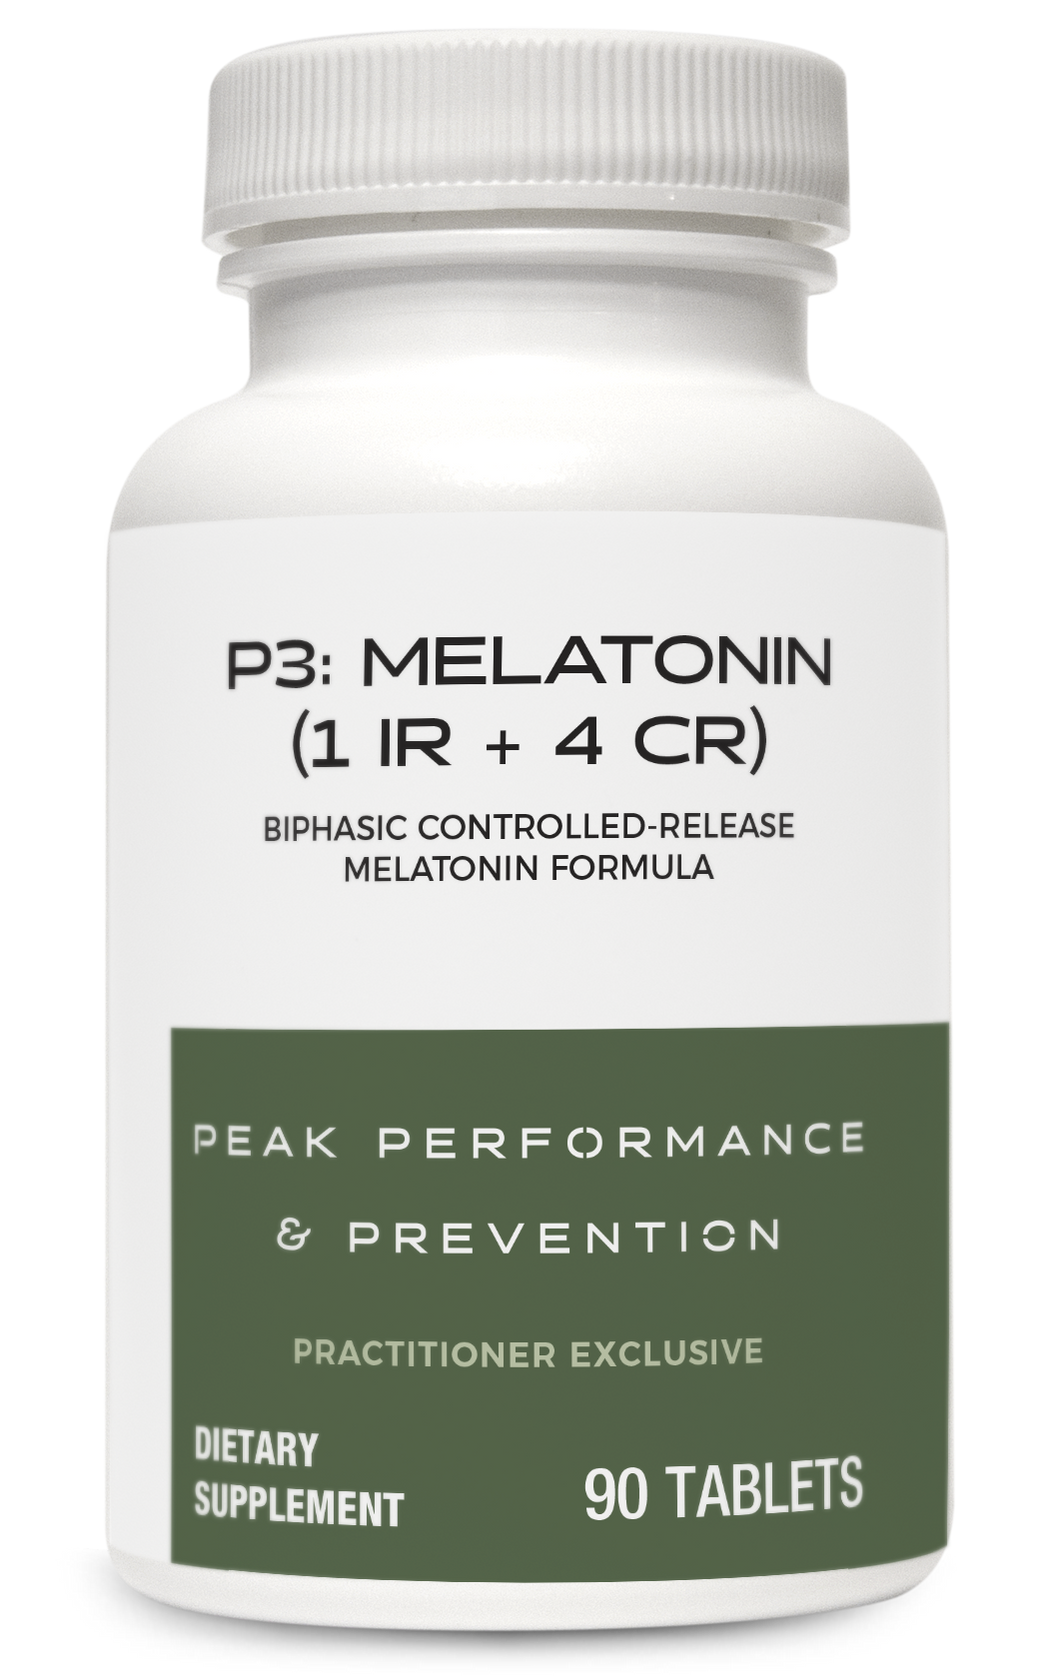 P3: Melatonin (1 IR + 4 CR)